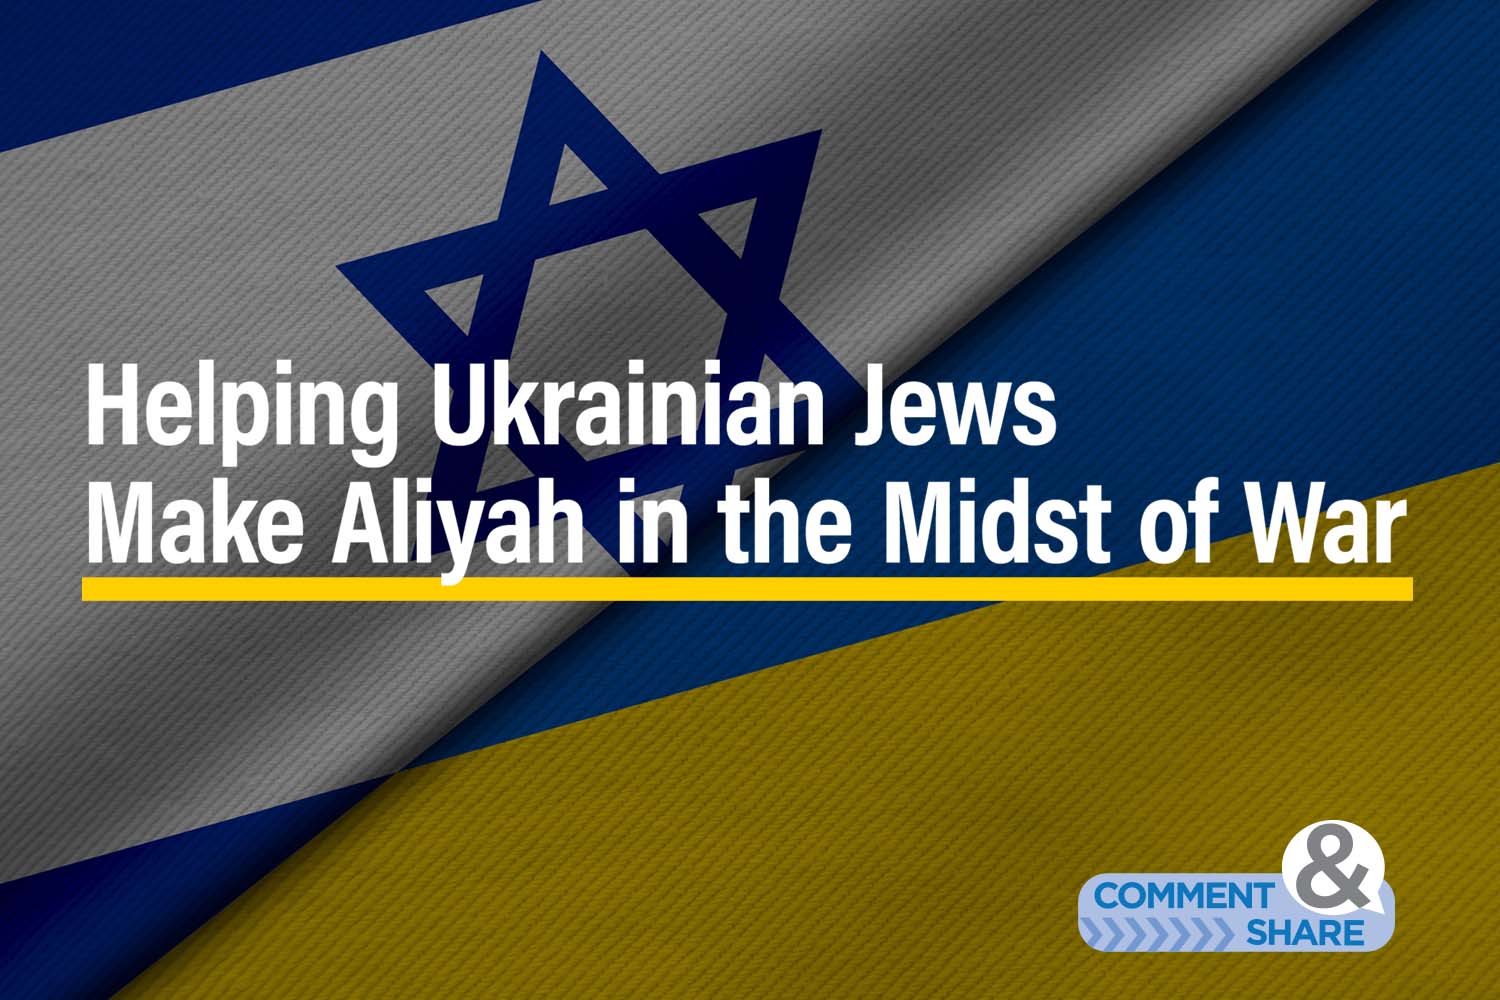 Ukrainian Jews Aliyah in Midst of War